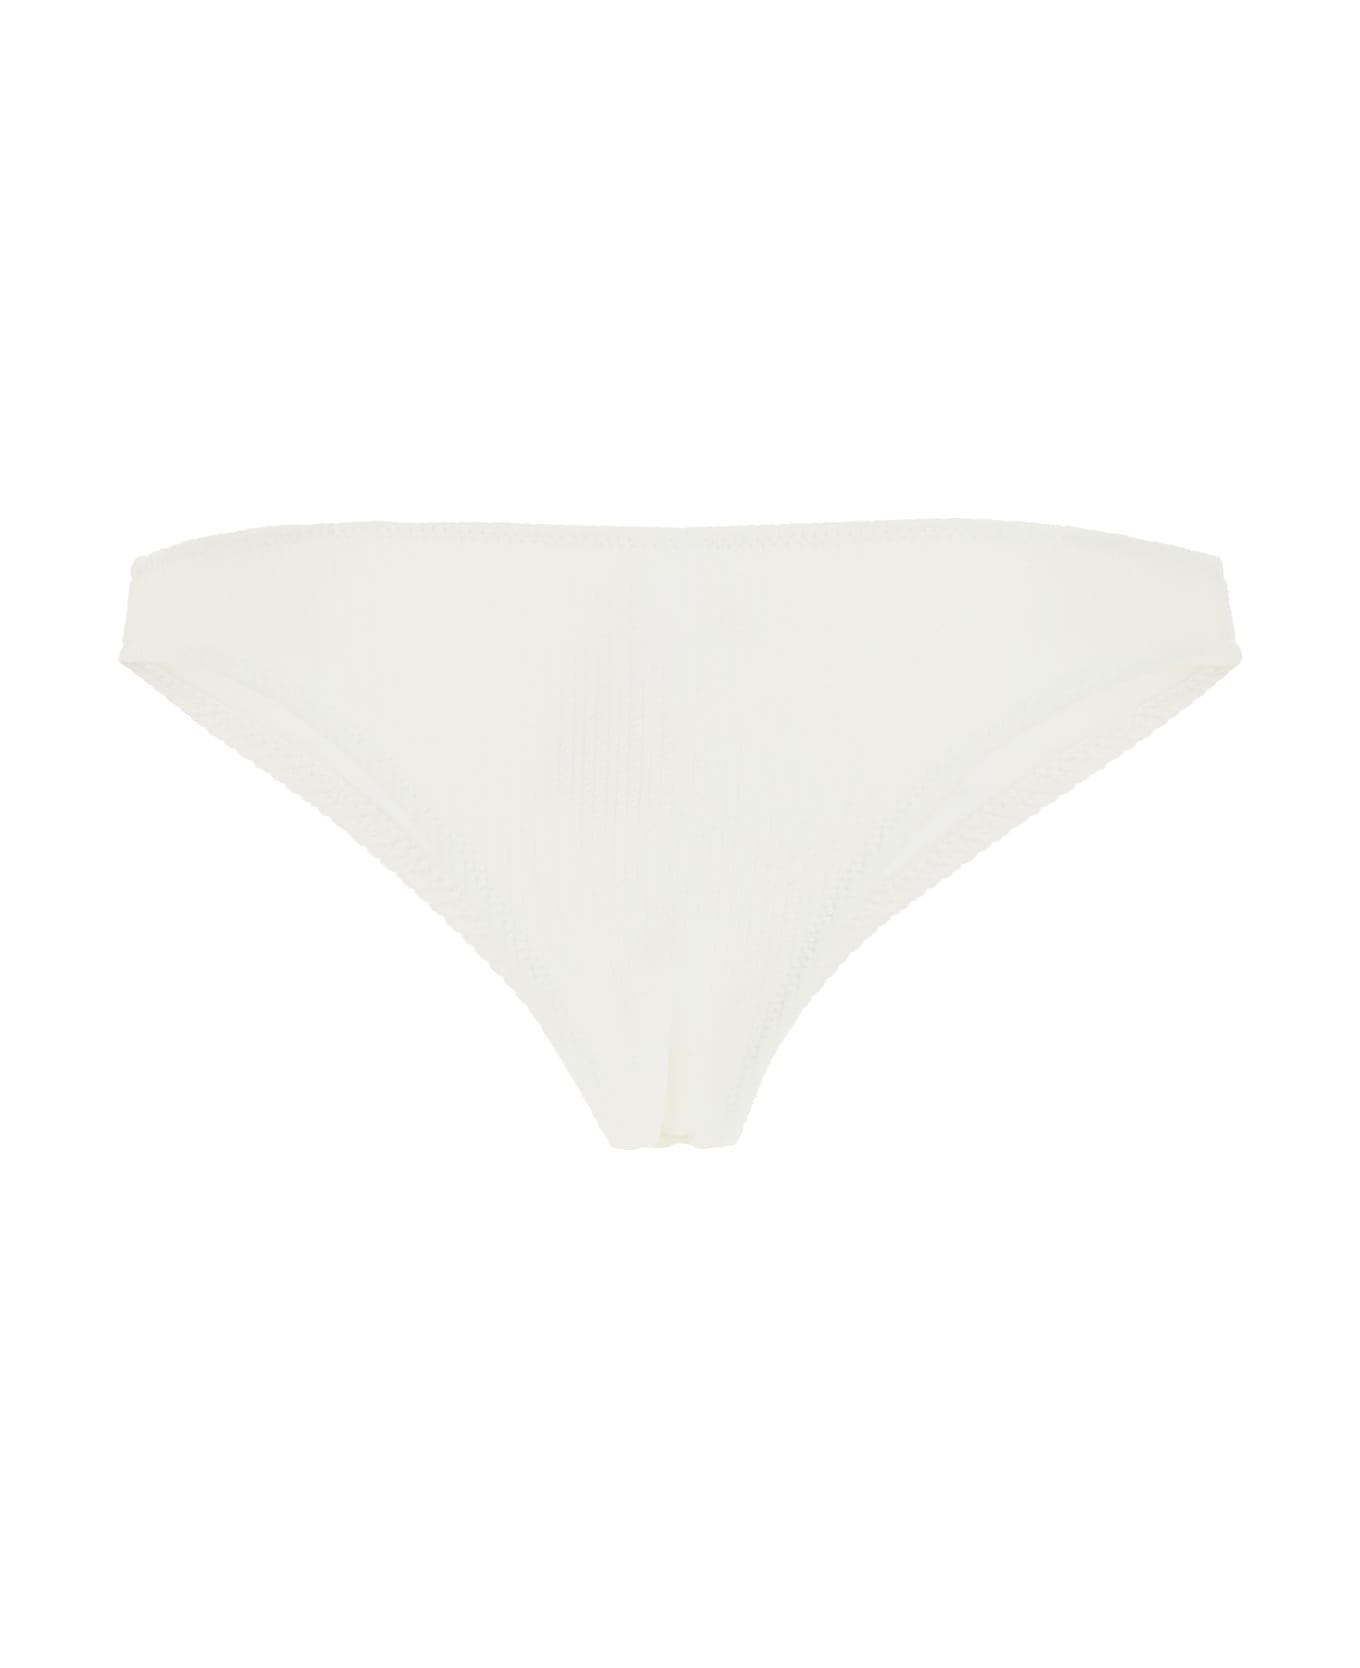 cool ocelot t shirt kids High-waisted Bikini Bottom - WHITE (White)